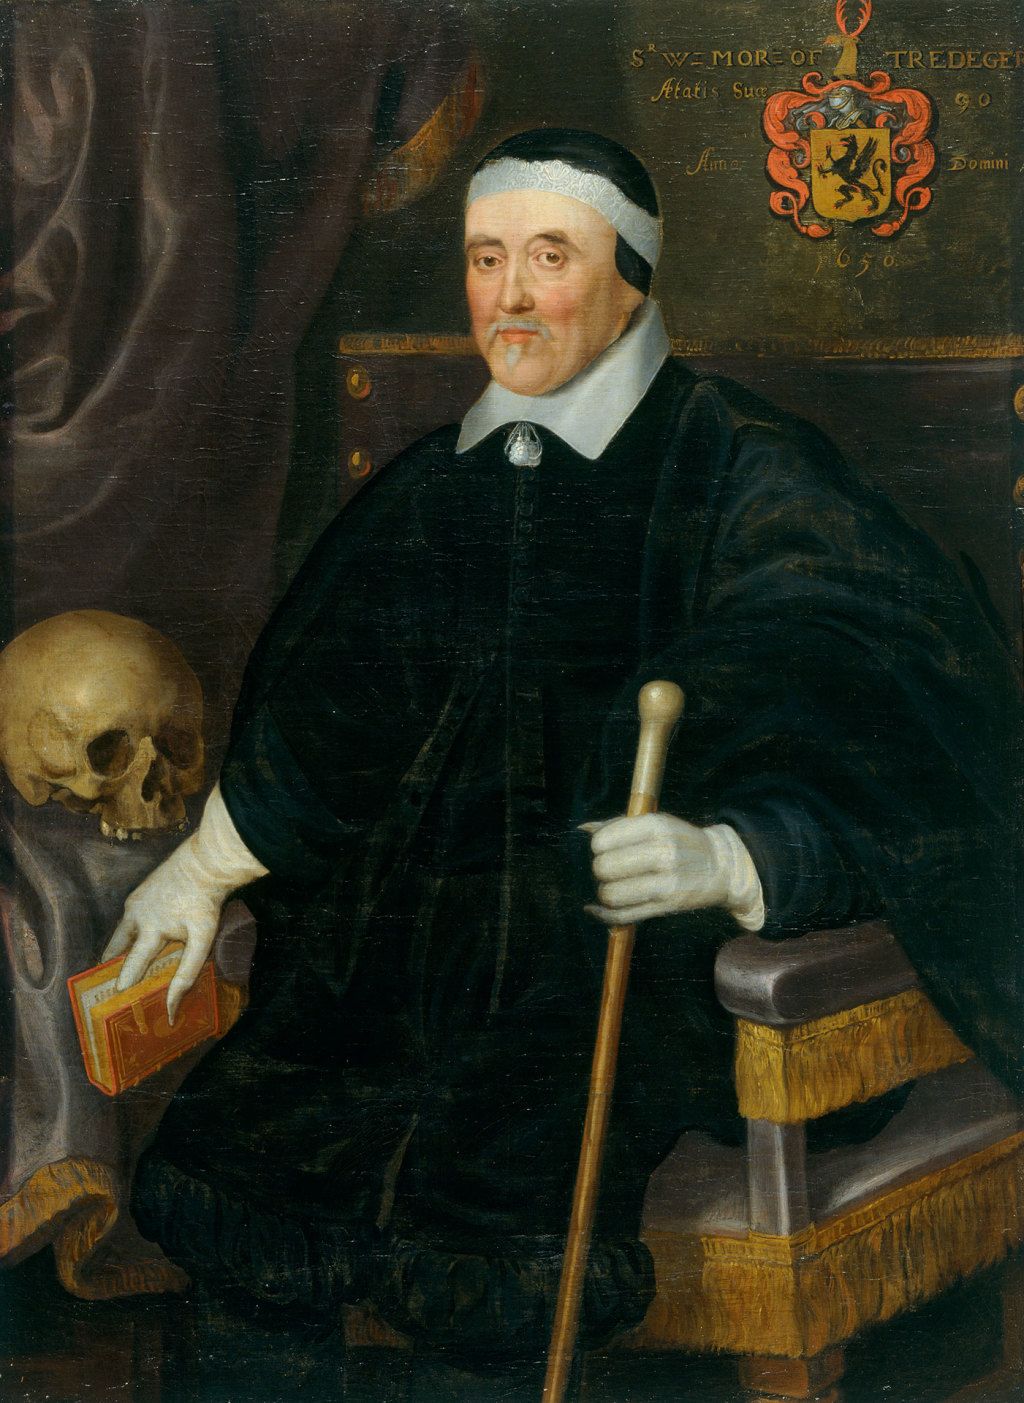 Sir William Morgan (1540-1653)